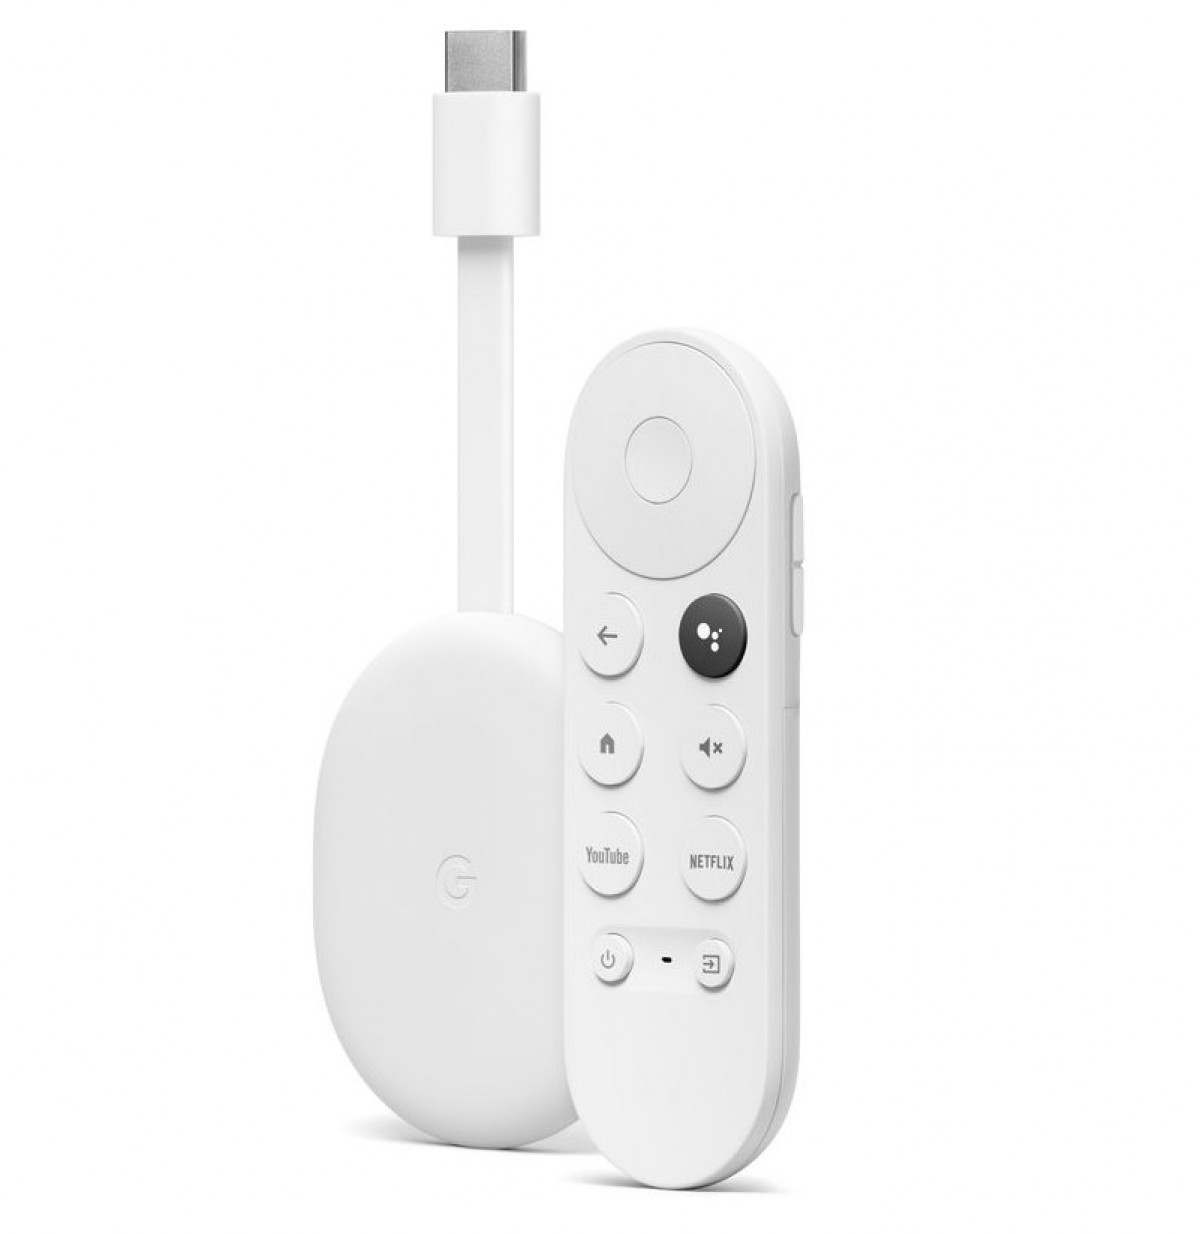 Google announces new Chromecast with Google TV for $50